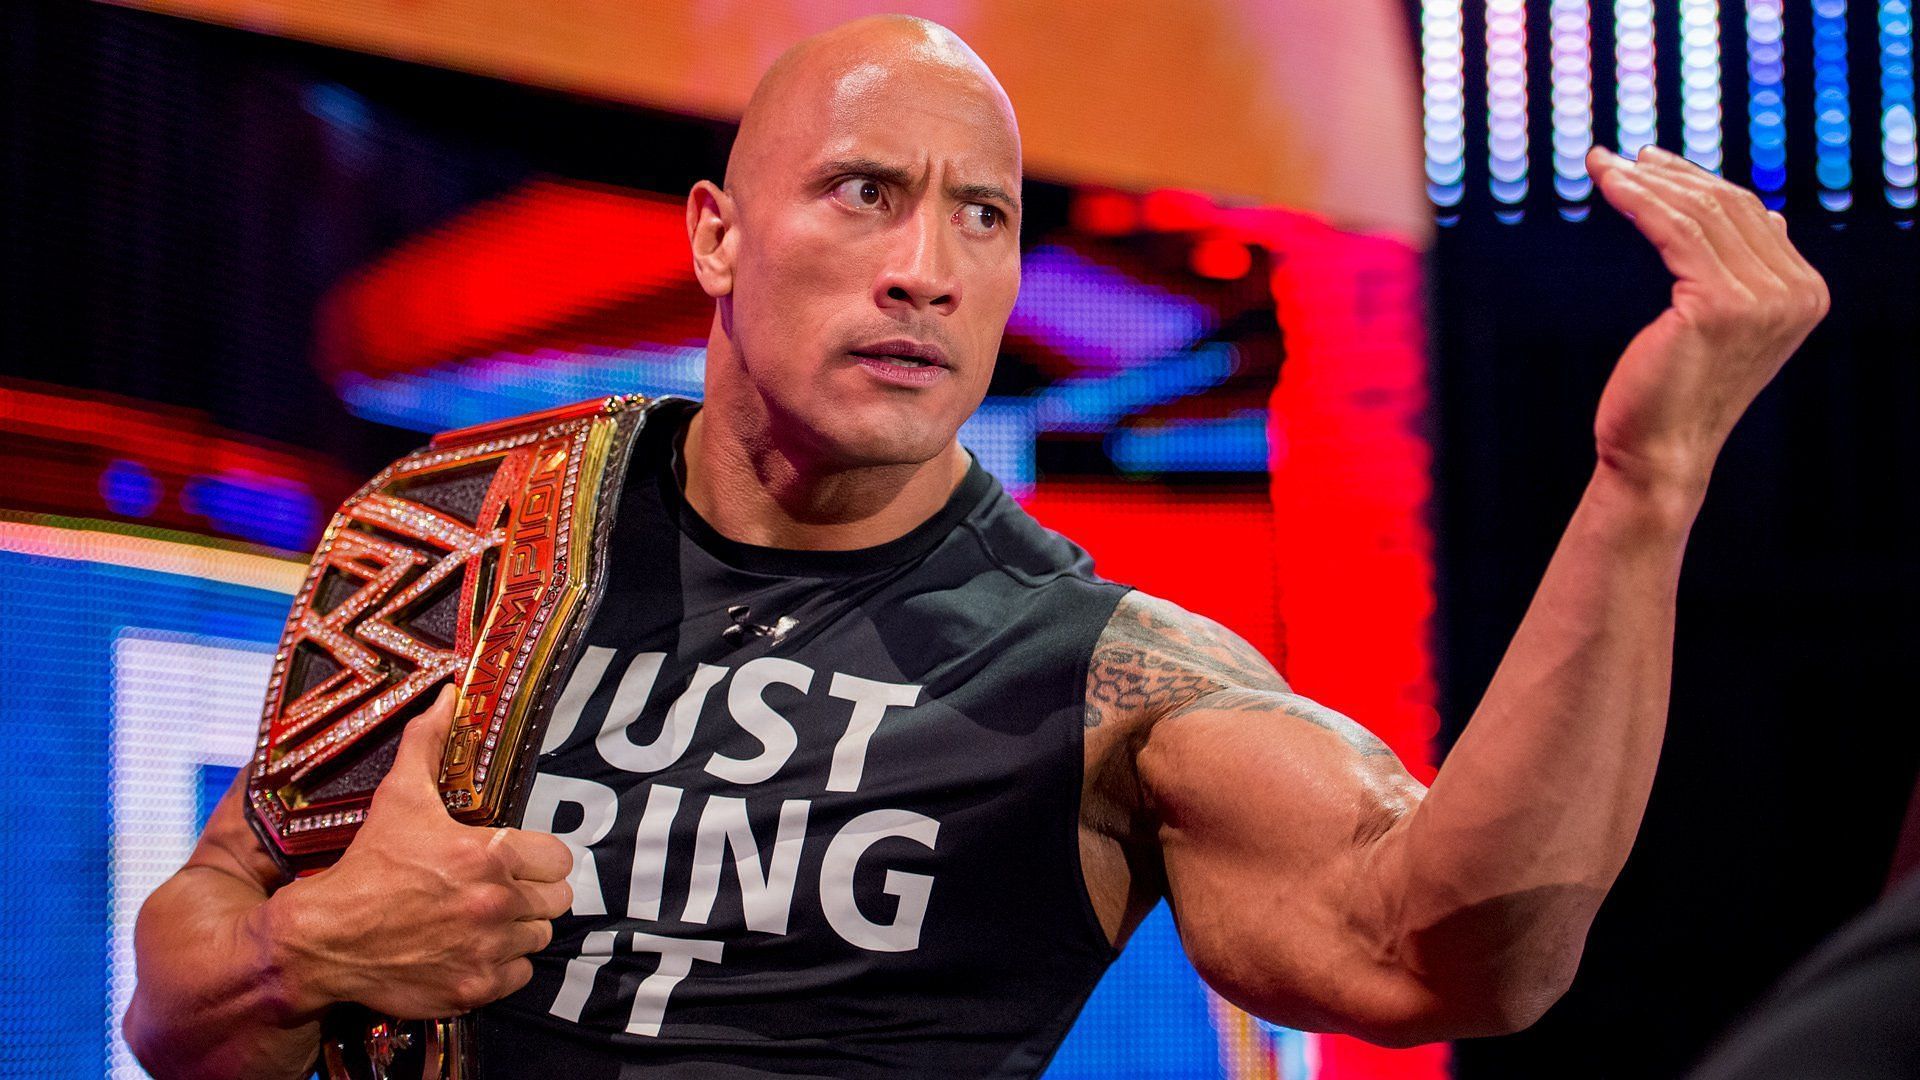 The Rock has enjoyed a major Hollywood career since leaving WWE